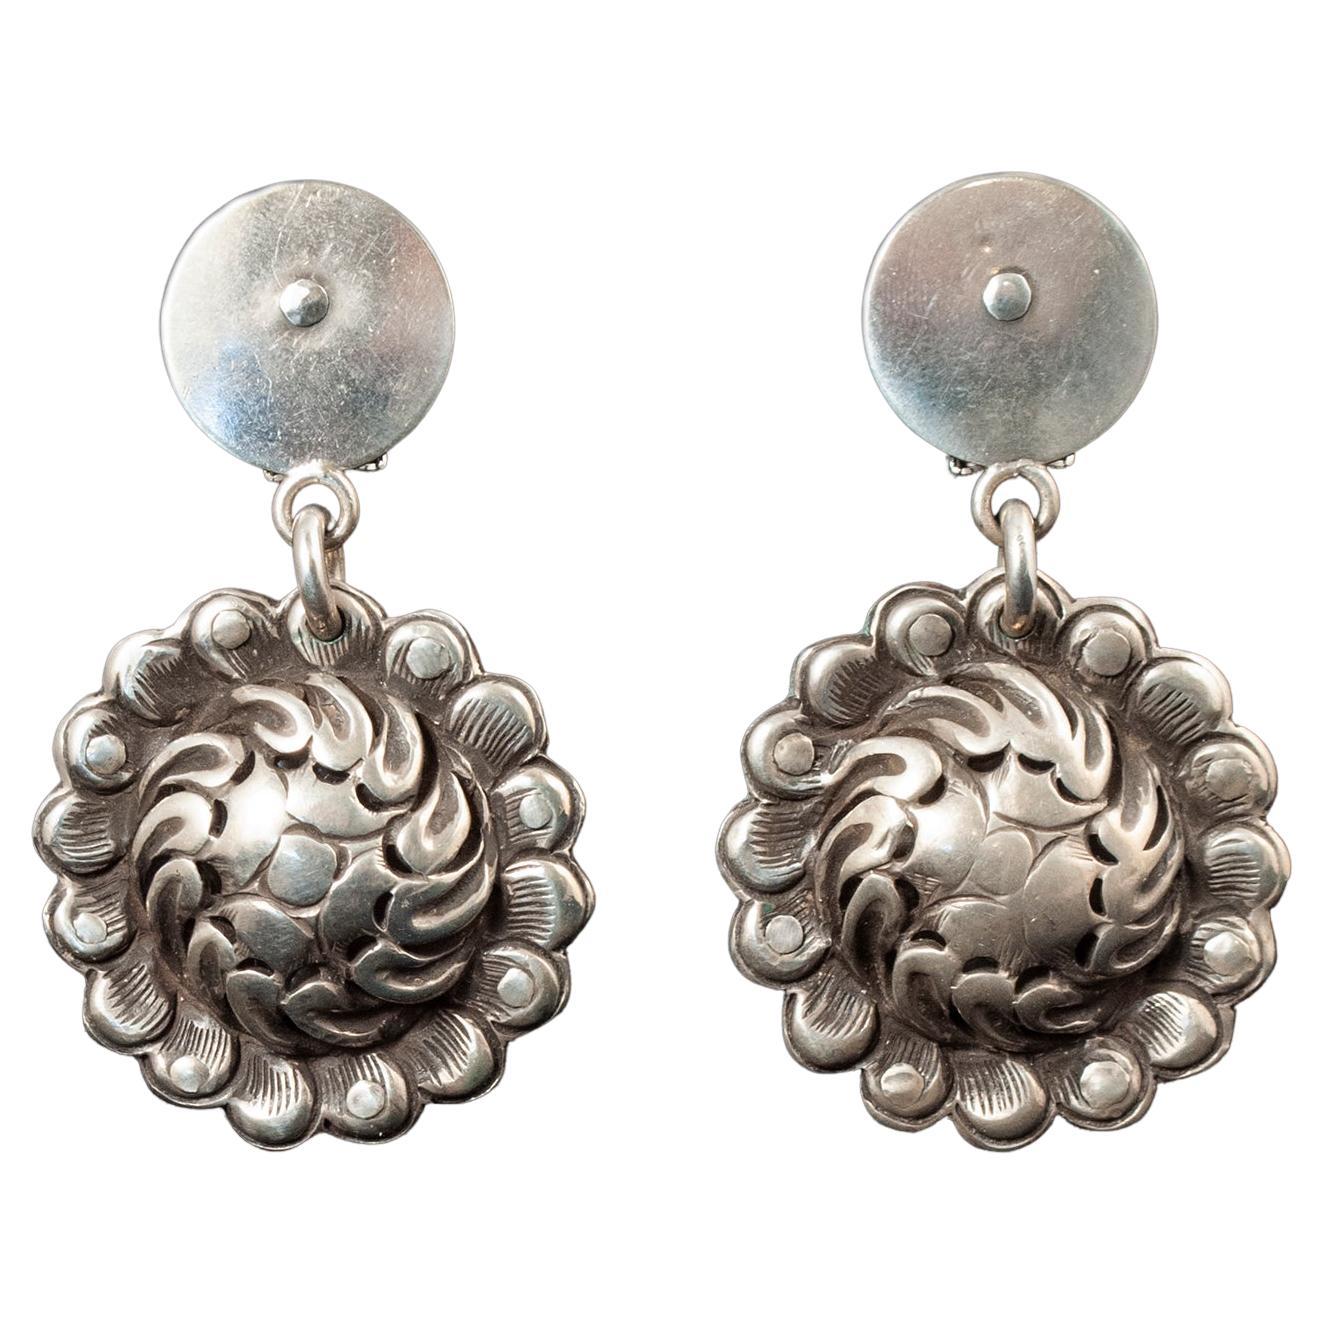 16x20mm Oval Stone Carved Tibetan Silver Dangle Earrings Fashion Jewelry Gift 